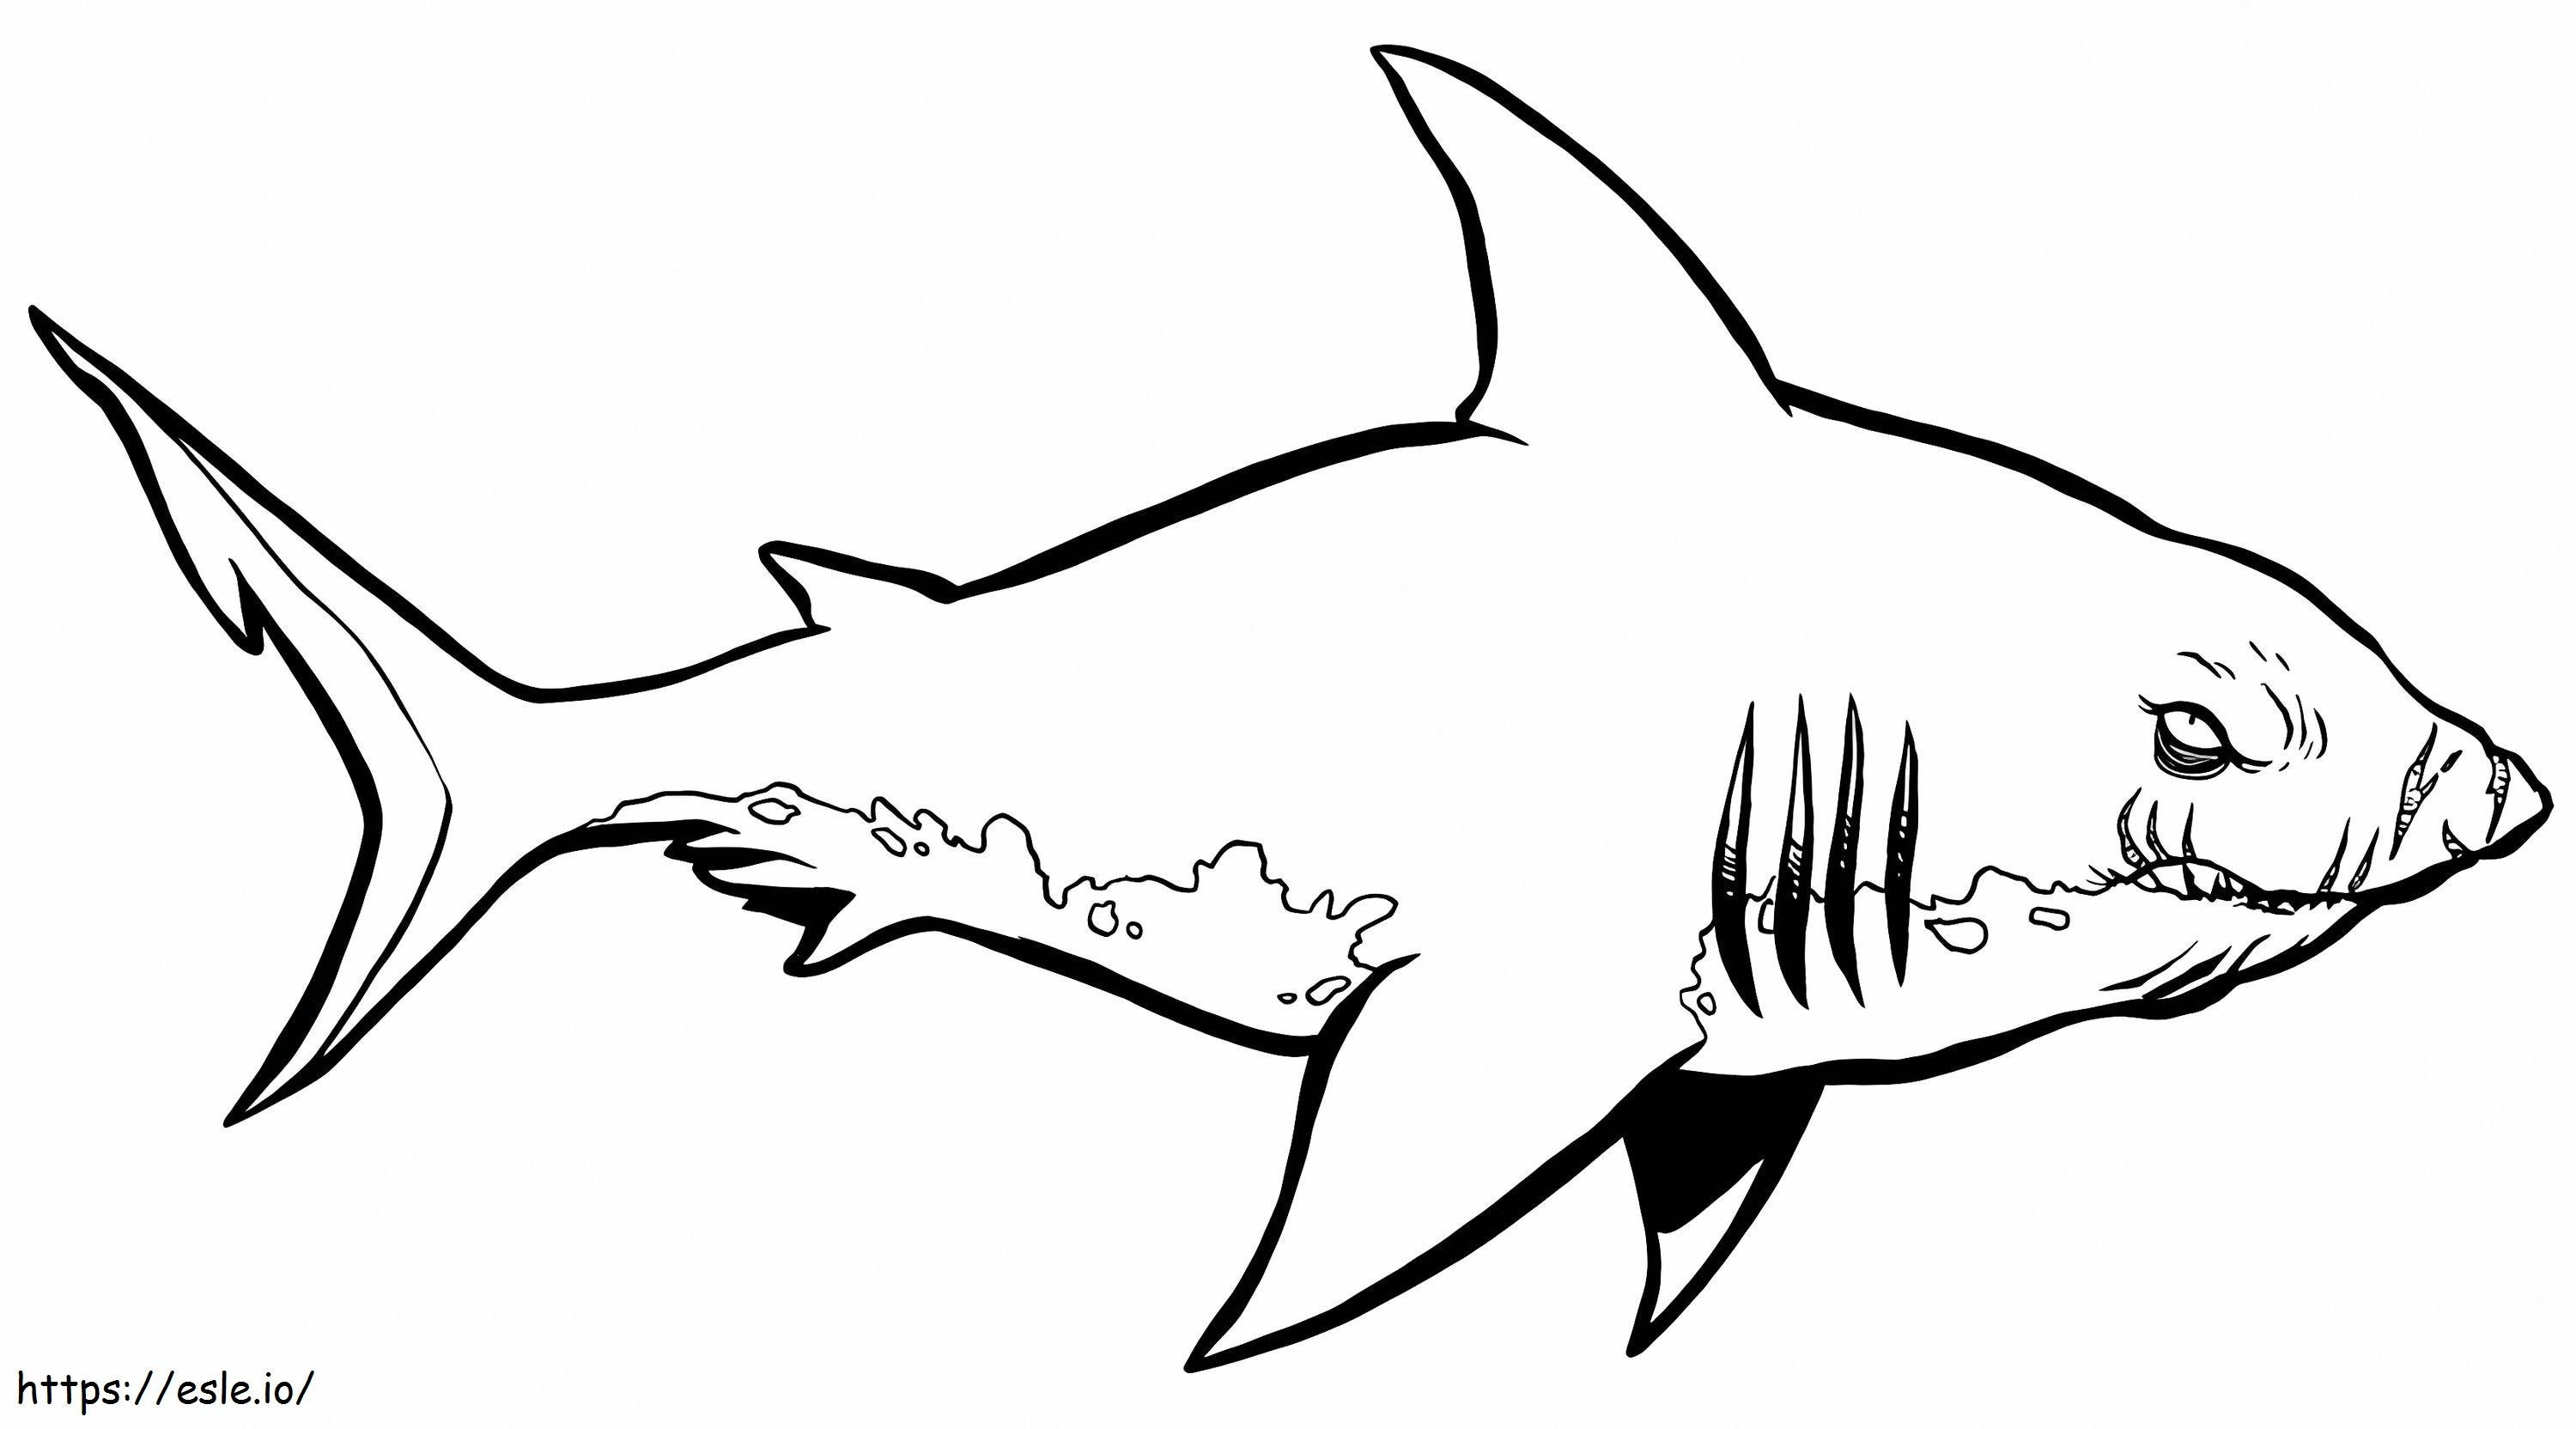 1541379158_Shark Pictures to Color Hain värityskirja Hammerhead Shark Clipart värityskirja Pencil Ravens värityskuva